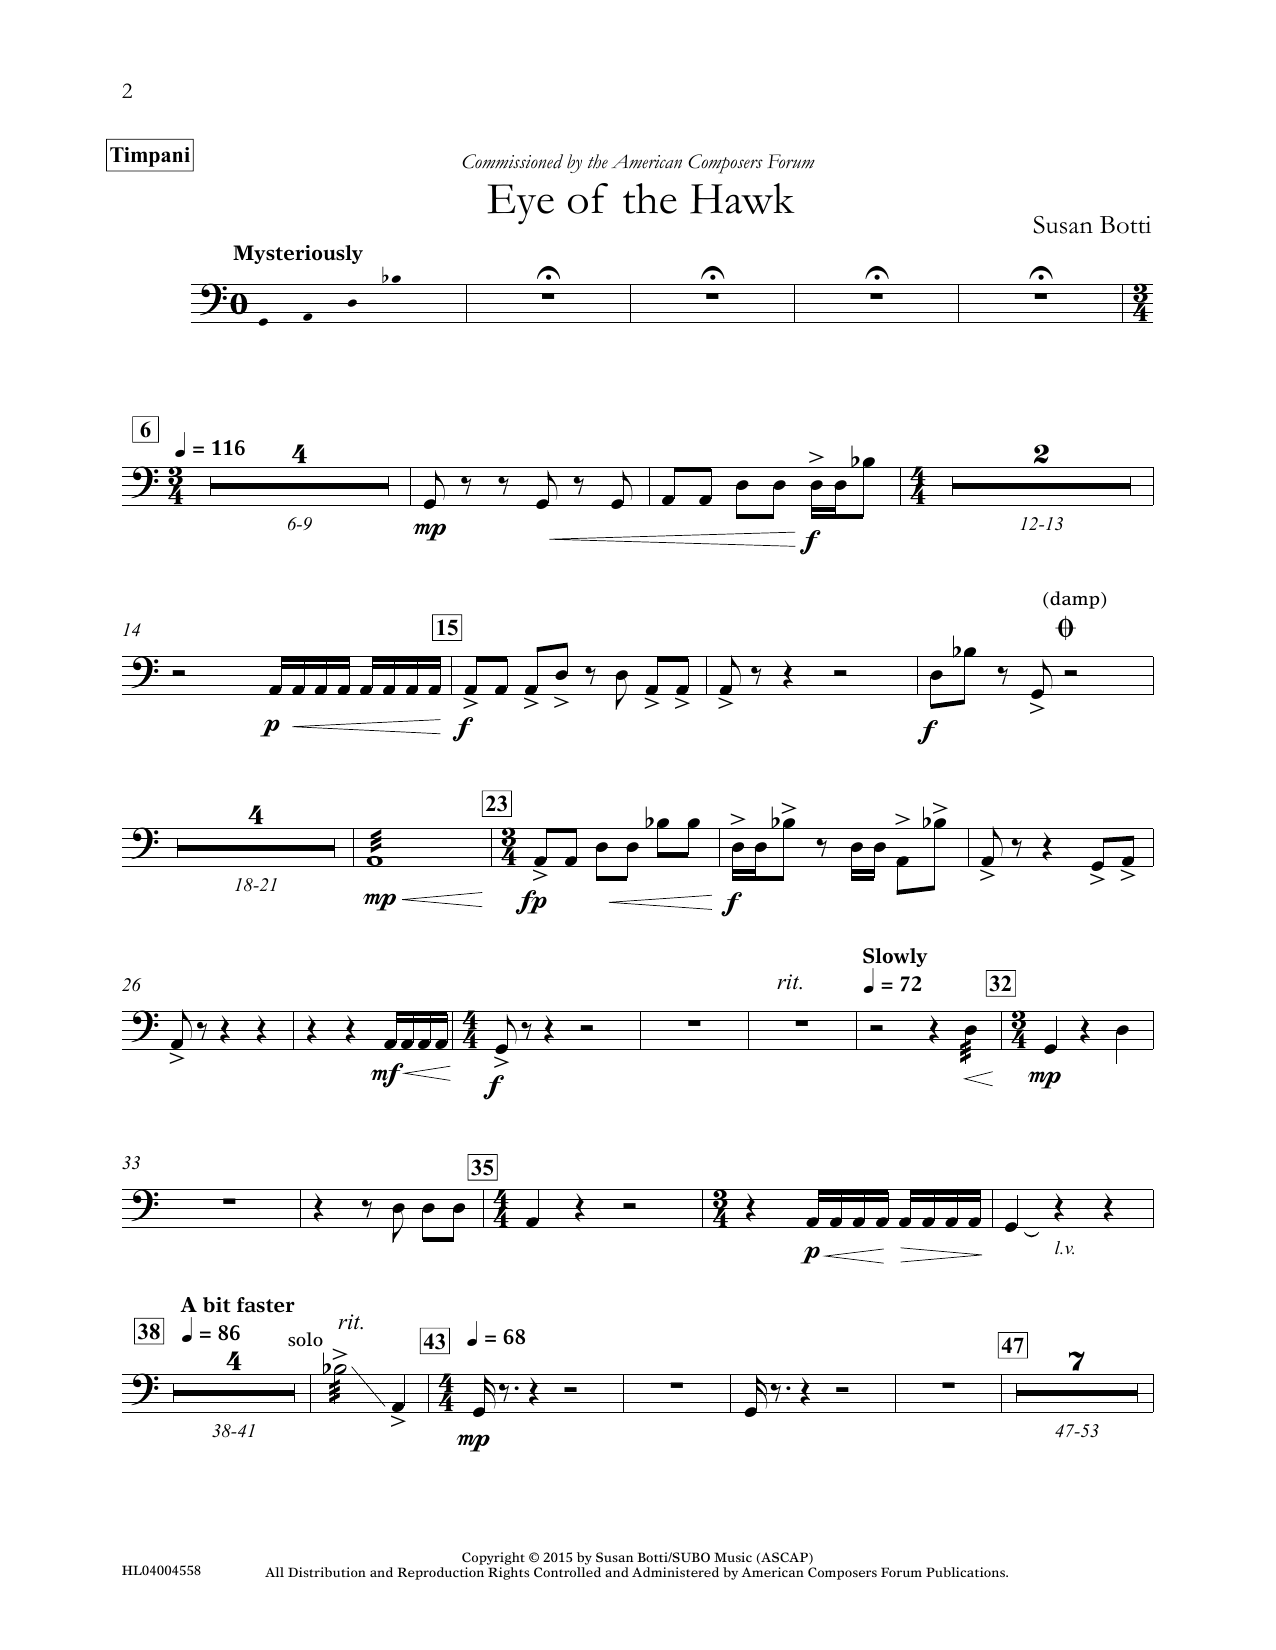 Download Susan Botti Eye of the Hawk - Timpani Sheet Music